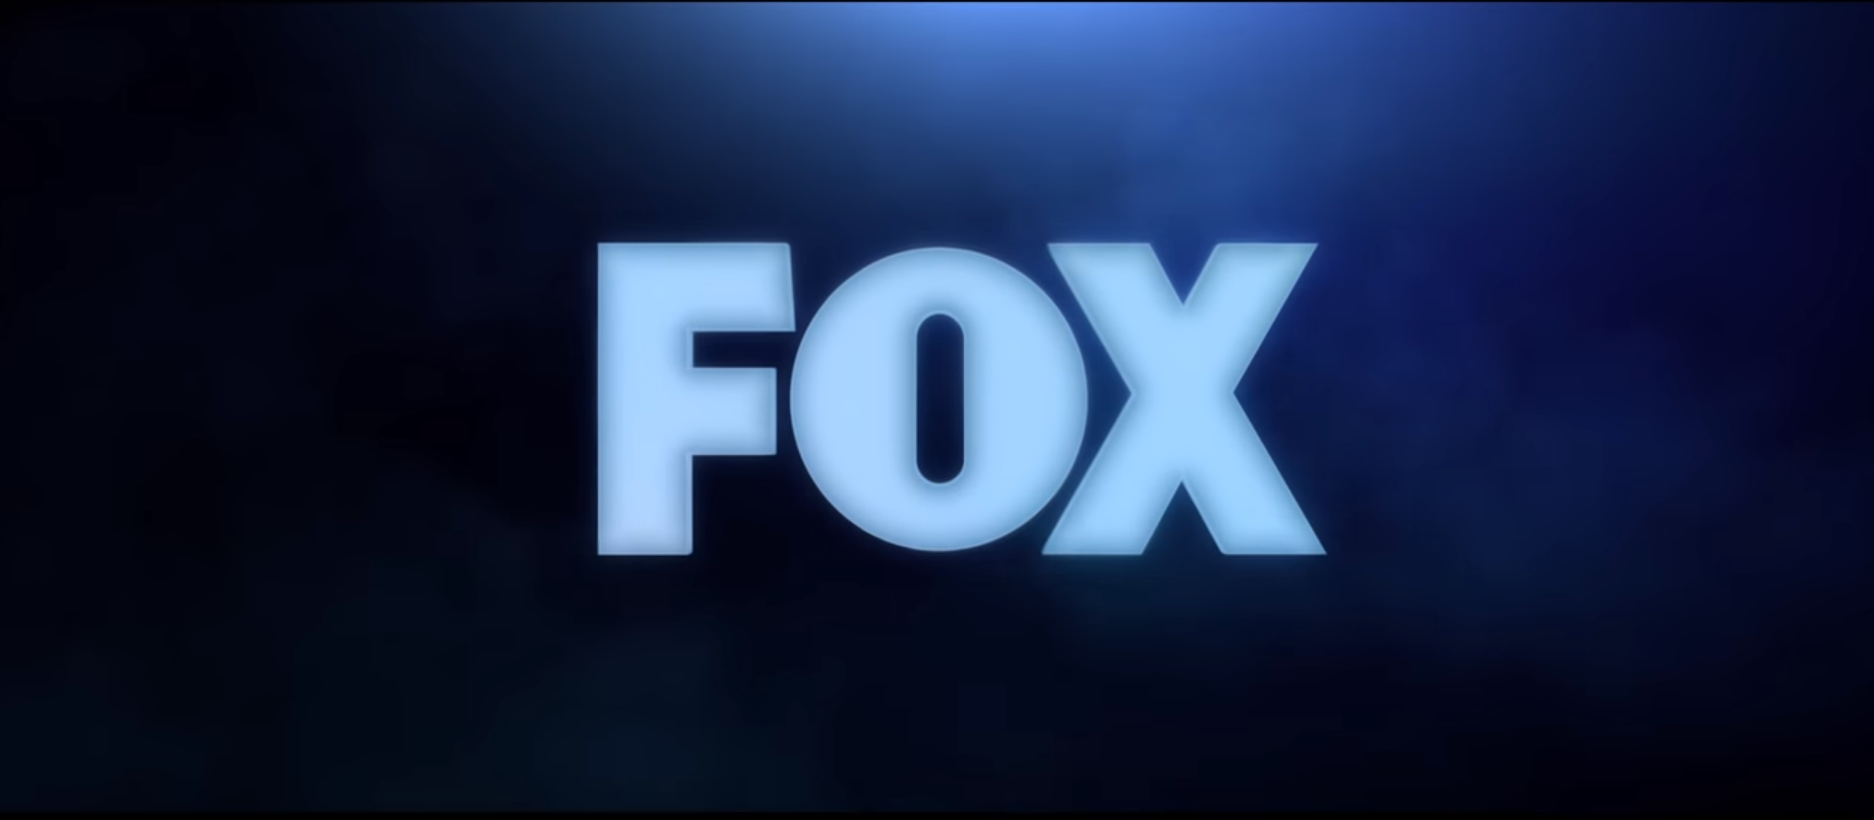 Fox TV shows. Fox Entertainment Group. Fox TV Ego. Fox канал прямой